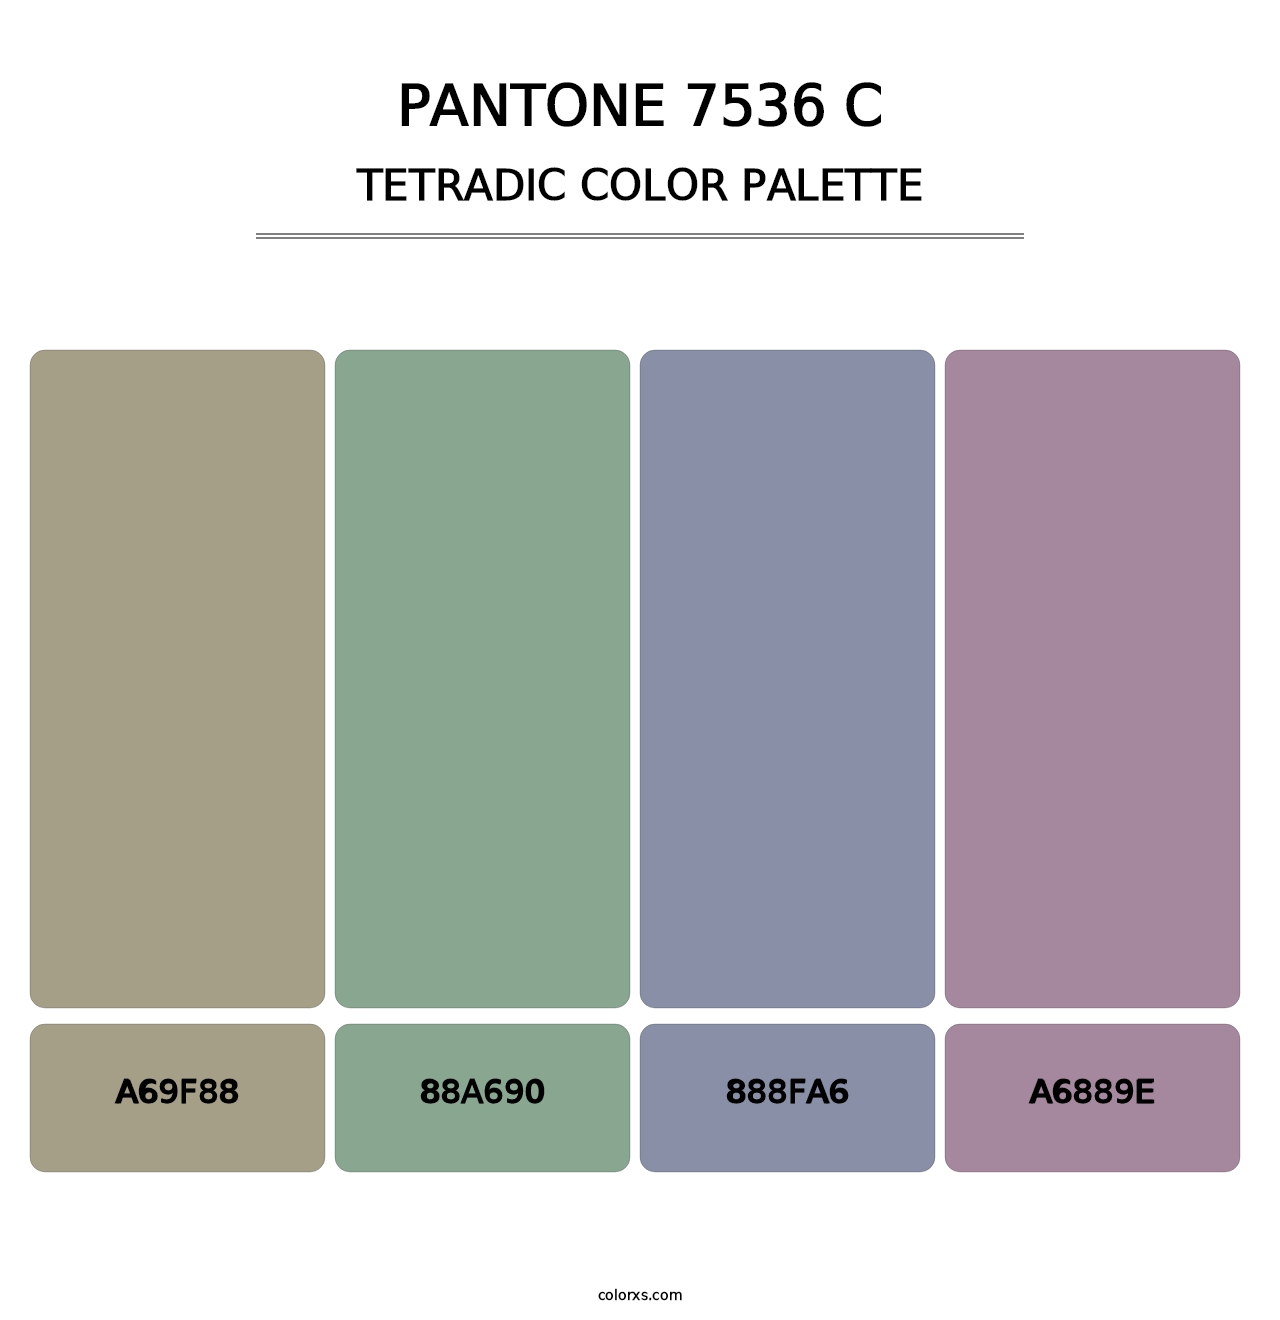 PANTONE 7536 C - Tetradic Color Palette